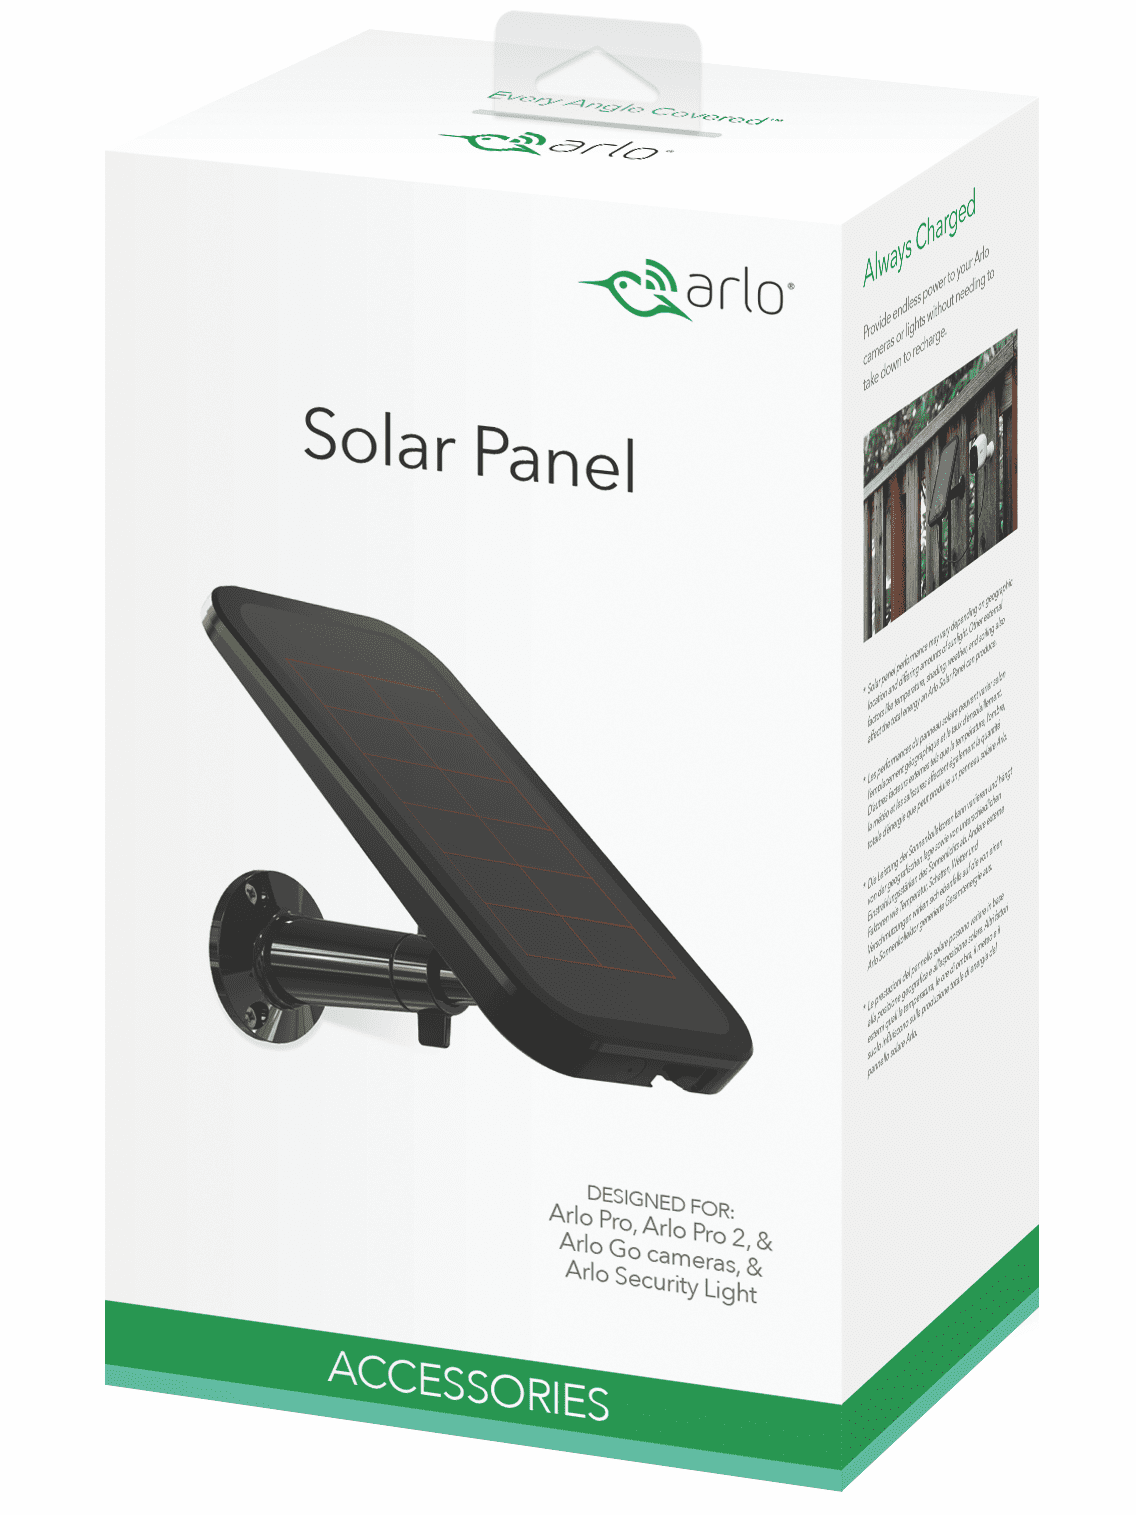 Arlo by Netgear Solar Panel for Pro and Go cameras (Model VMA4600) eBay